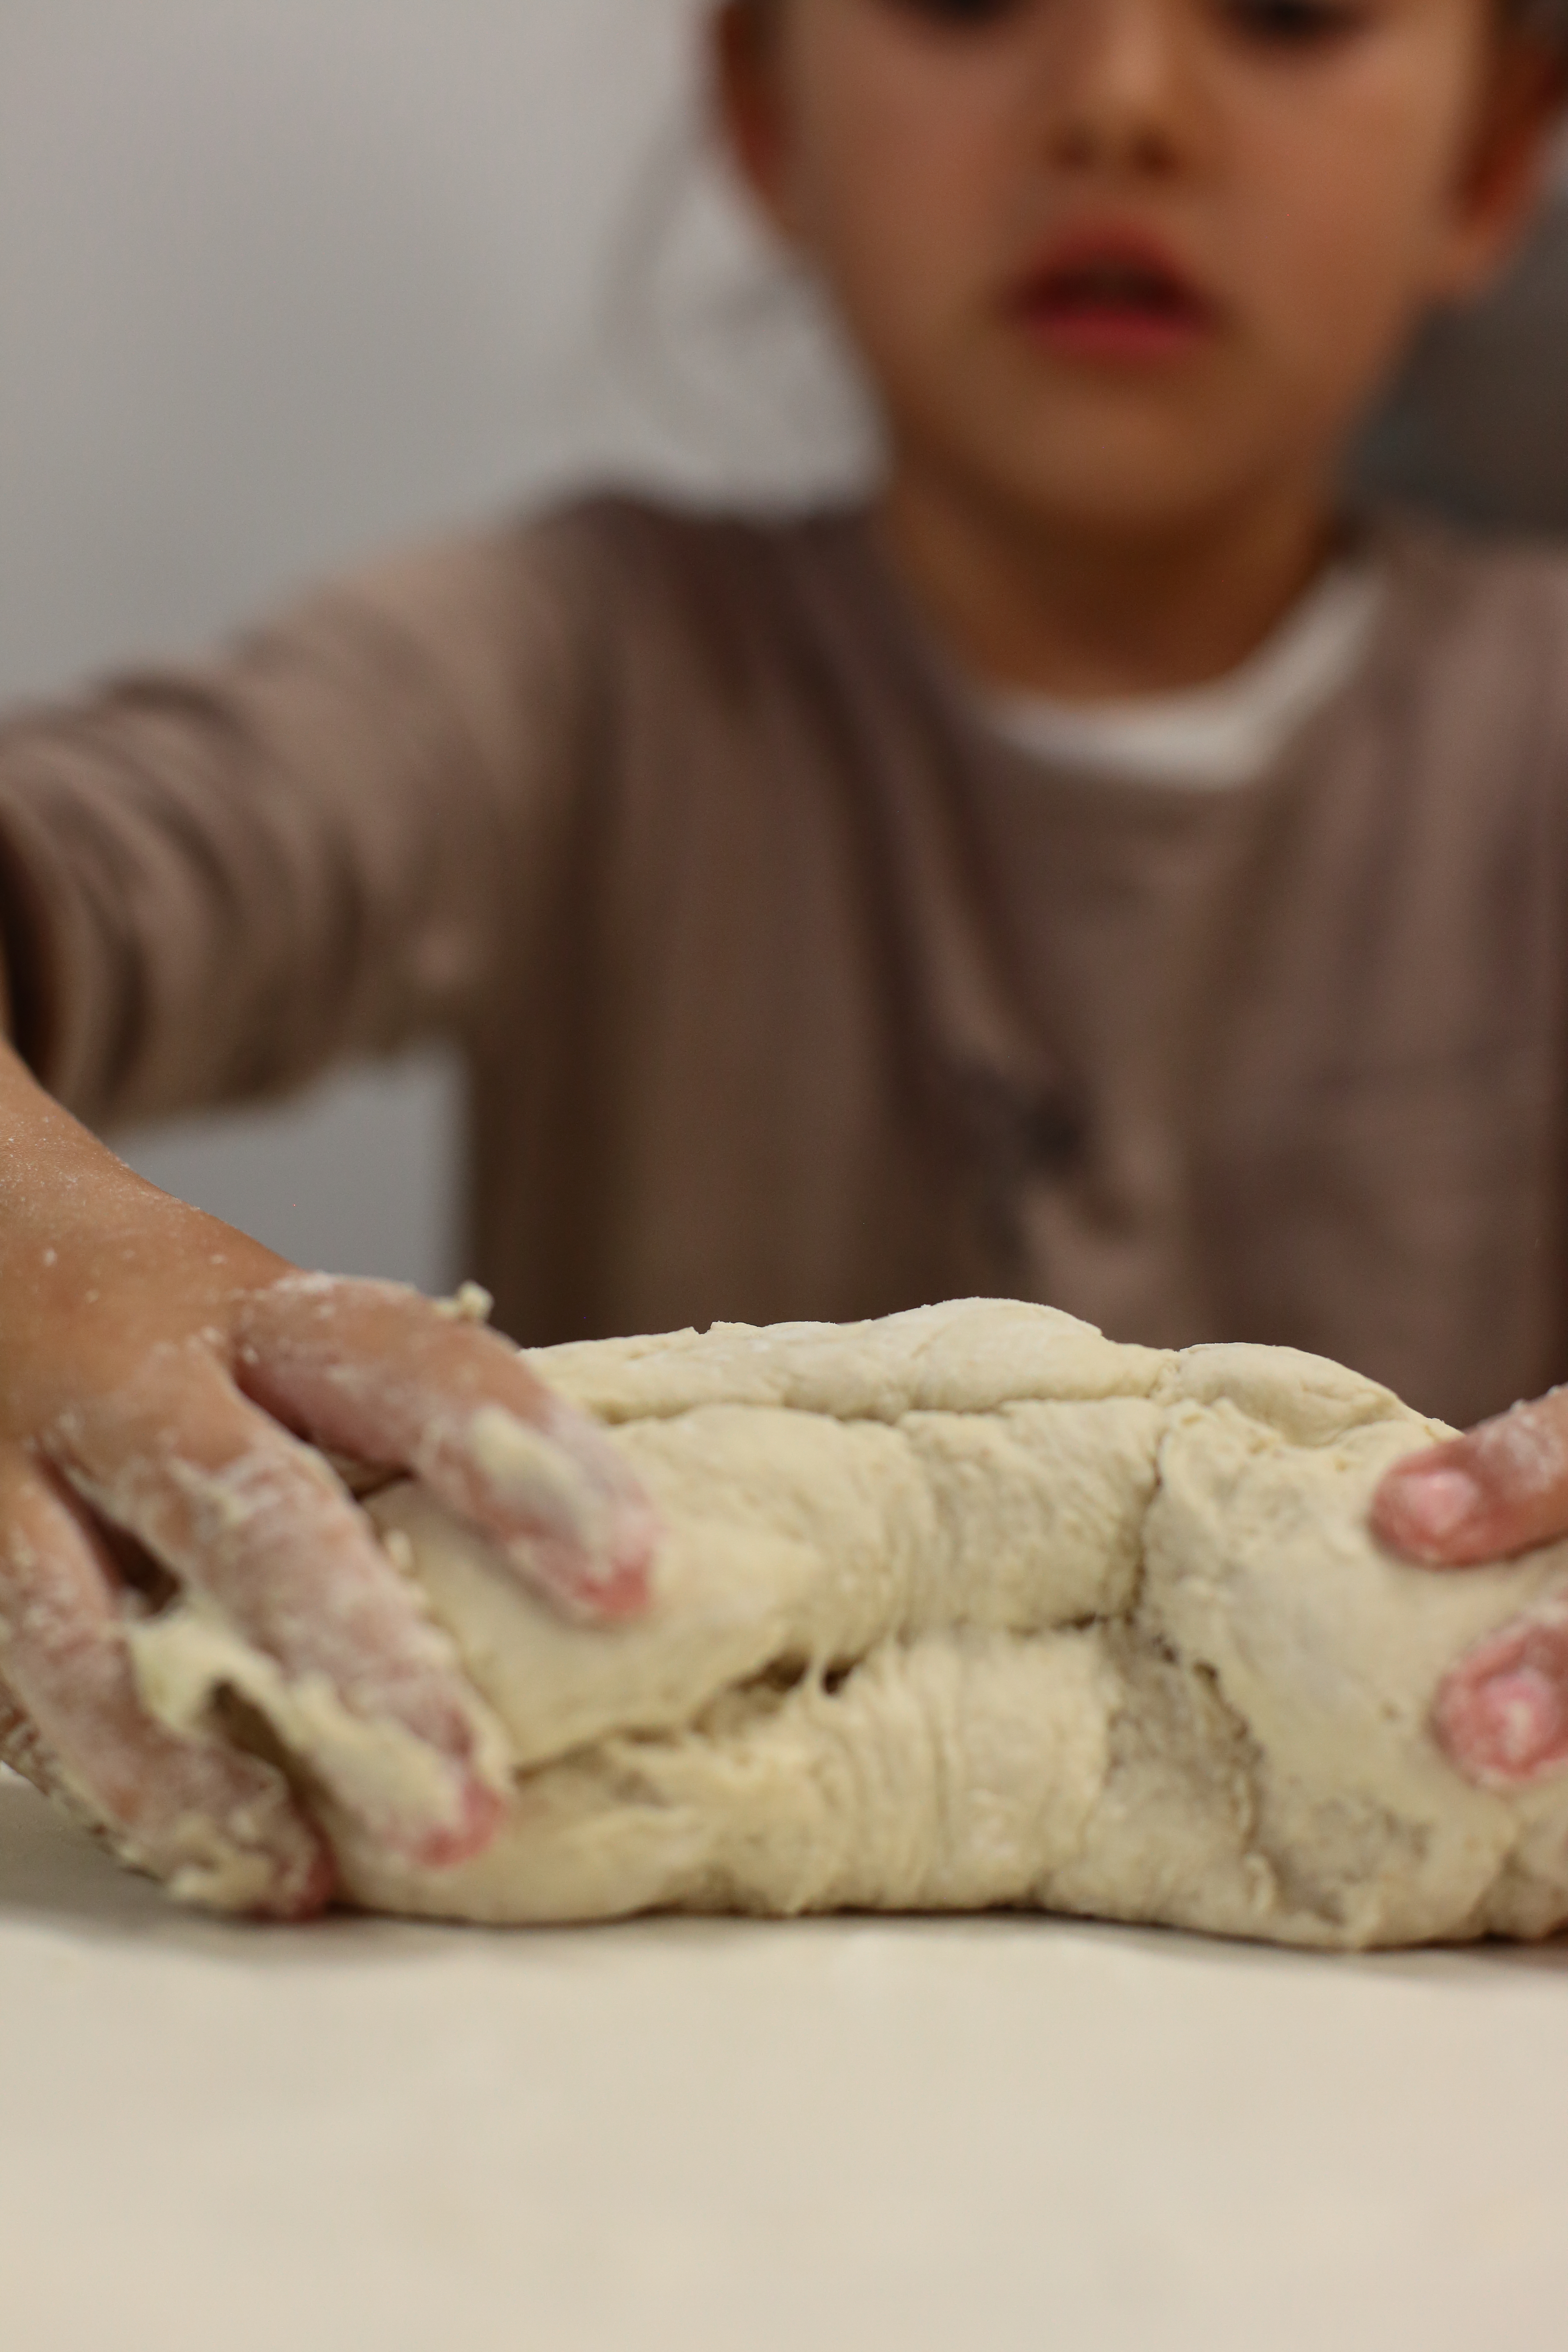 Alumne fent el taller de pa